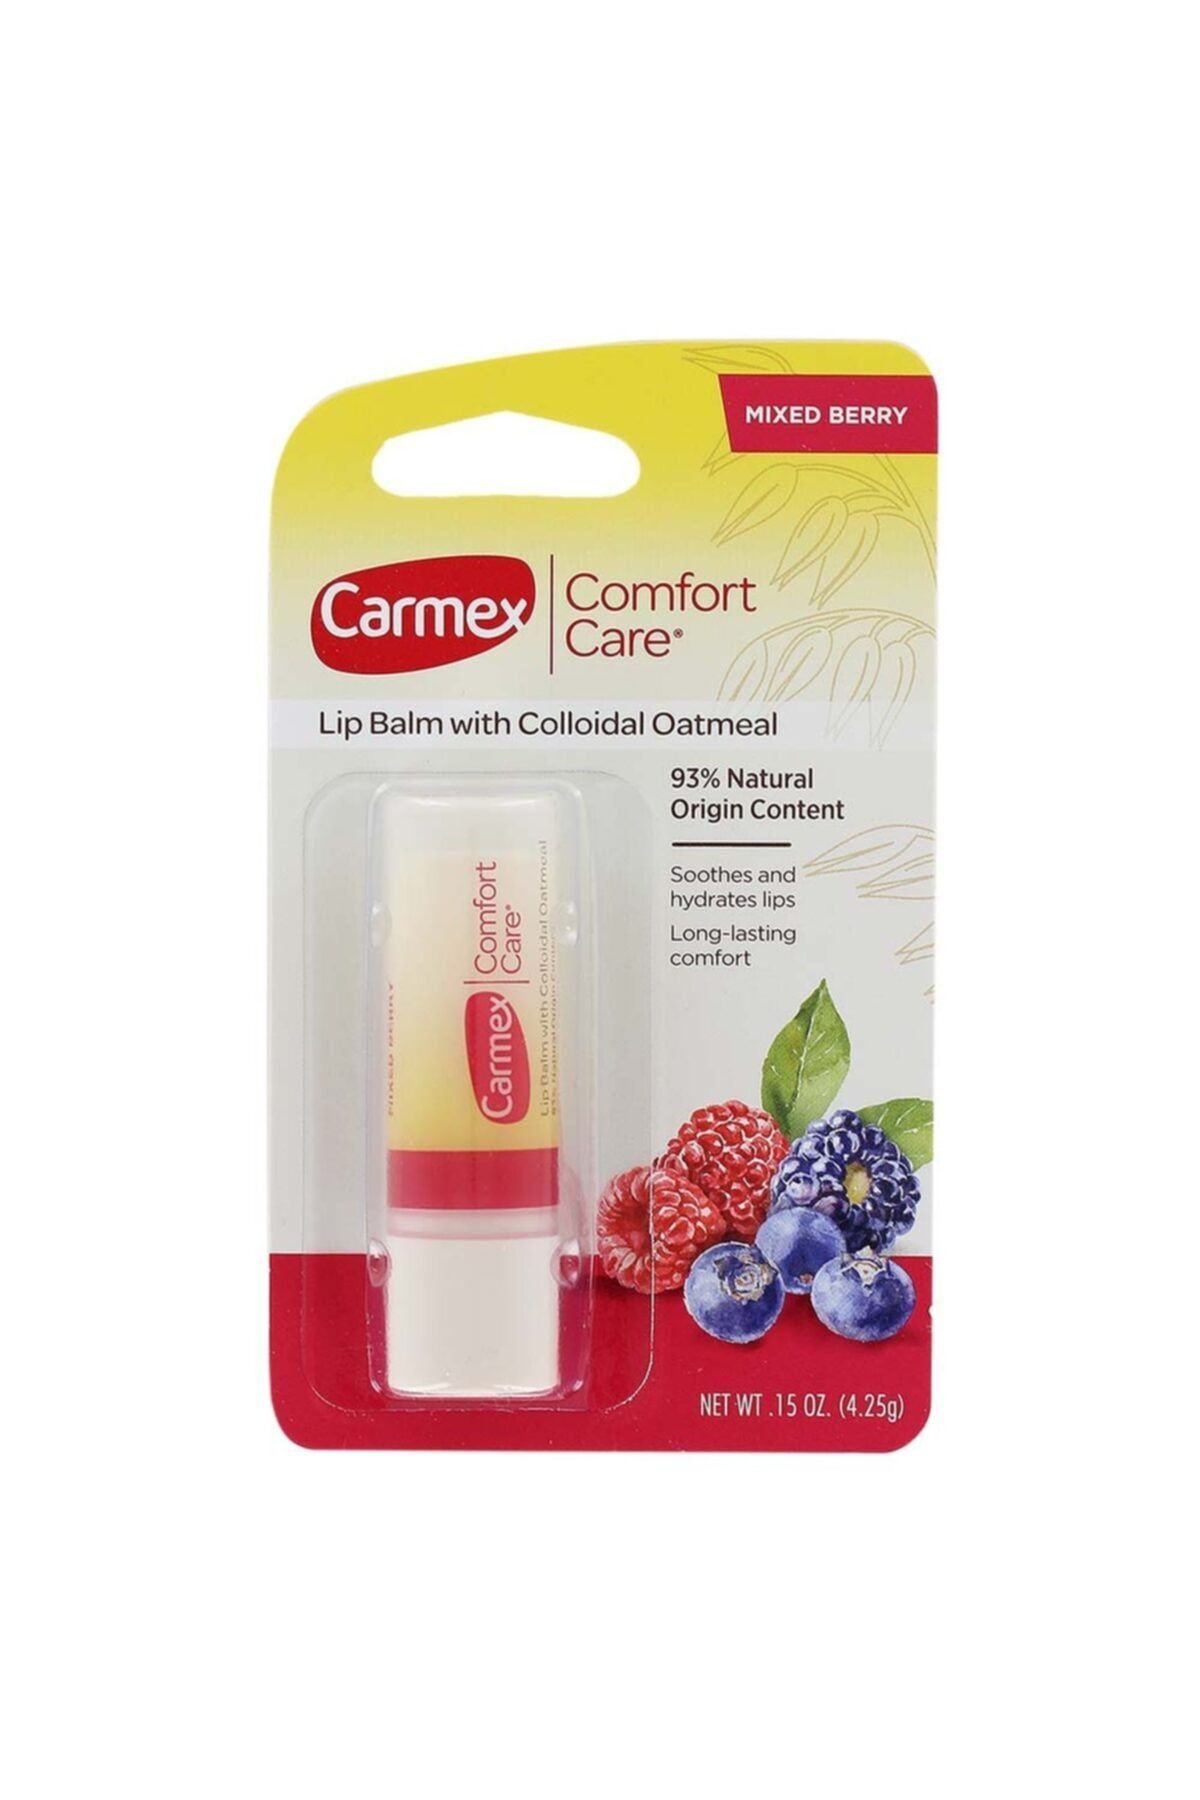 Carmex Comfort Care Mixed Berry Lip Balm 4,25 Gr